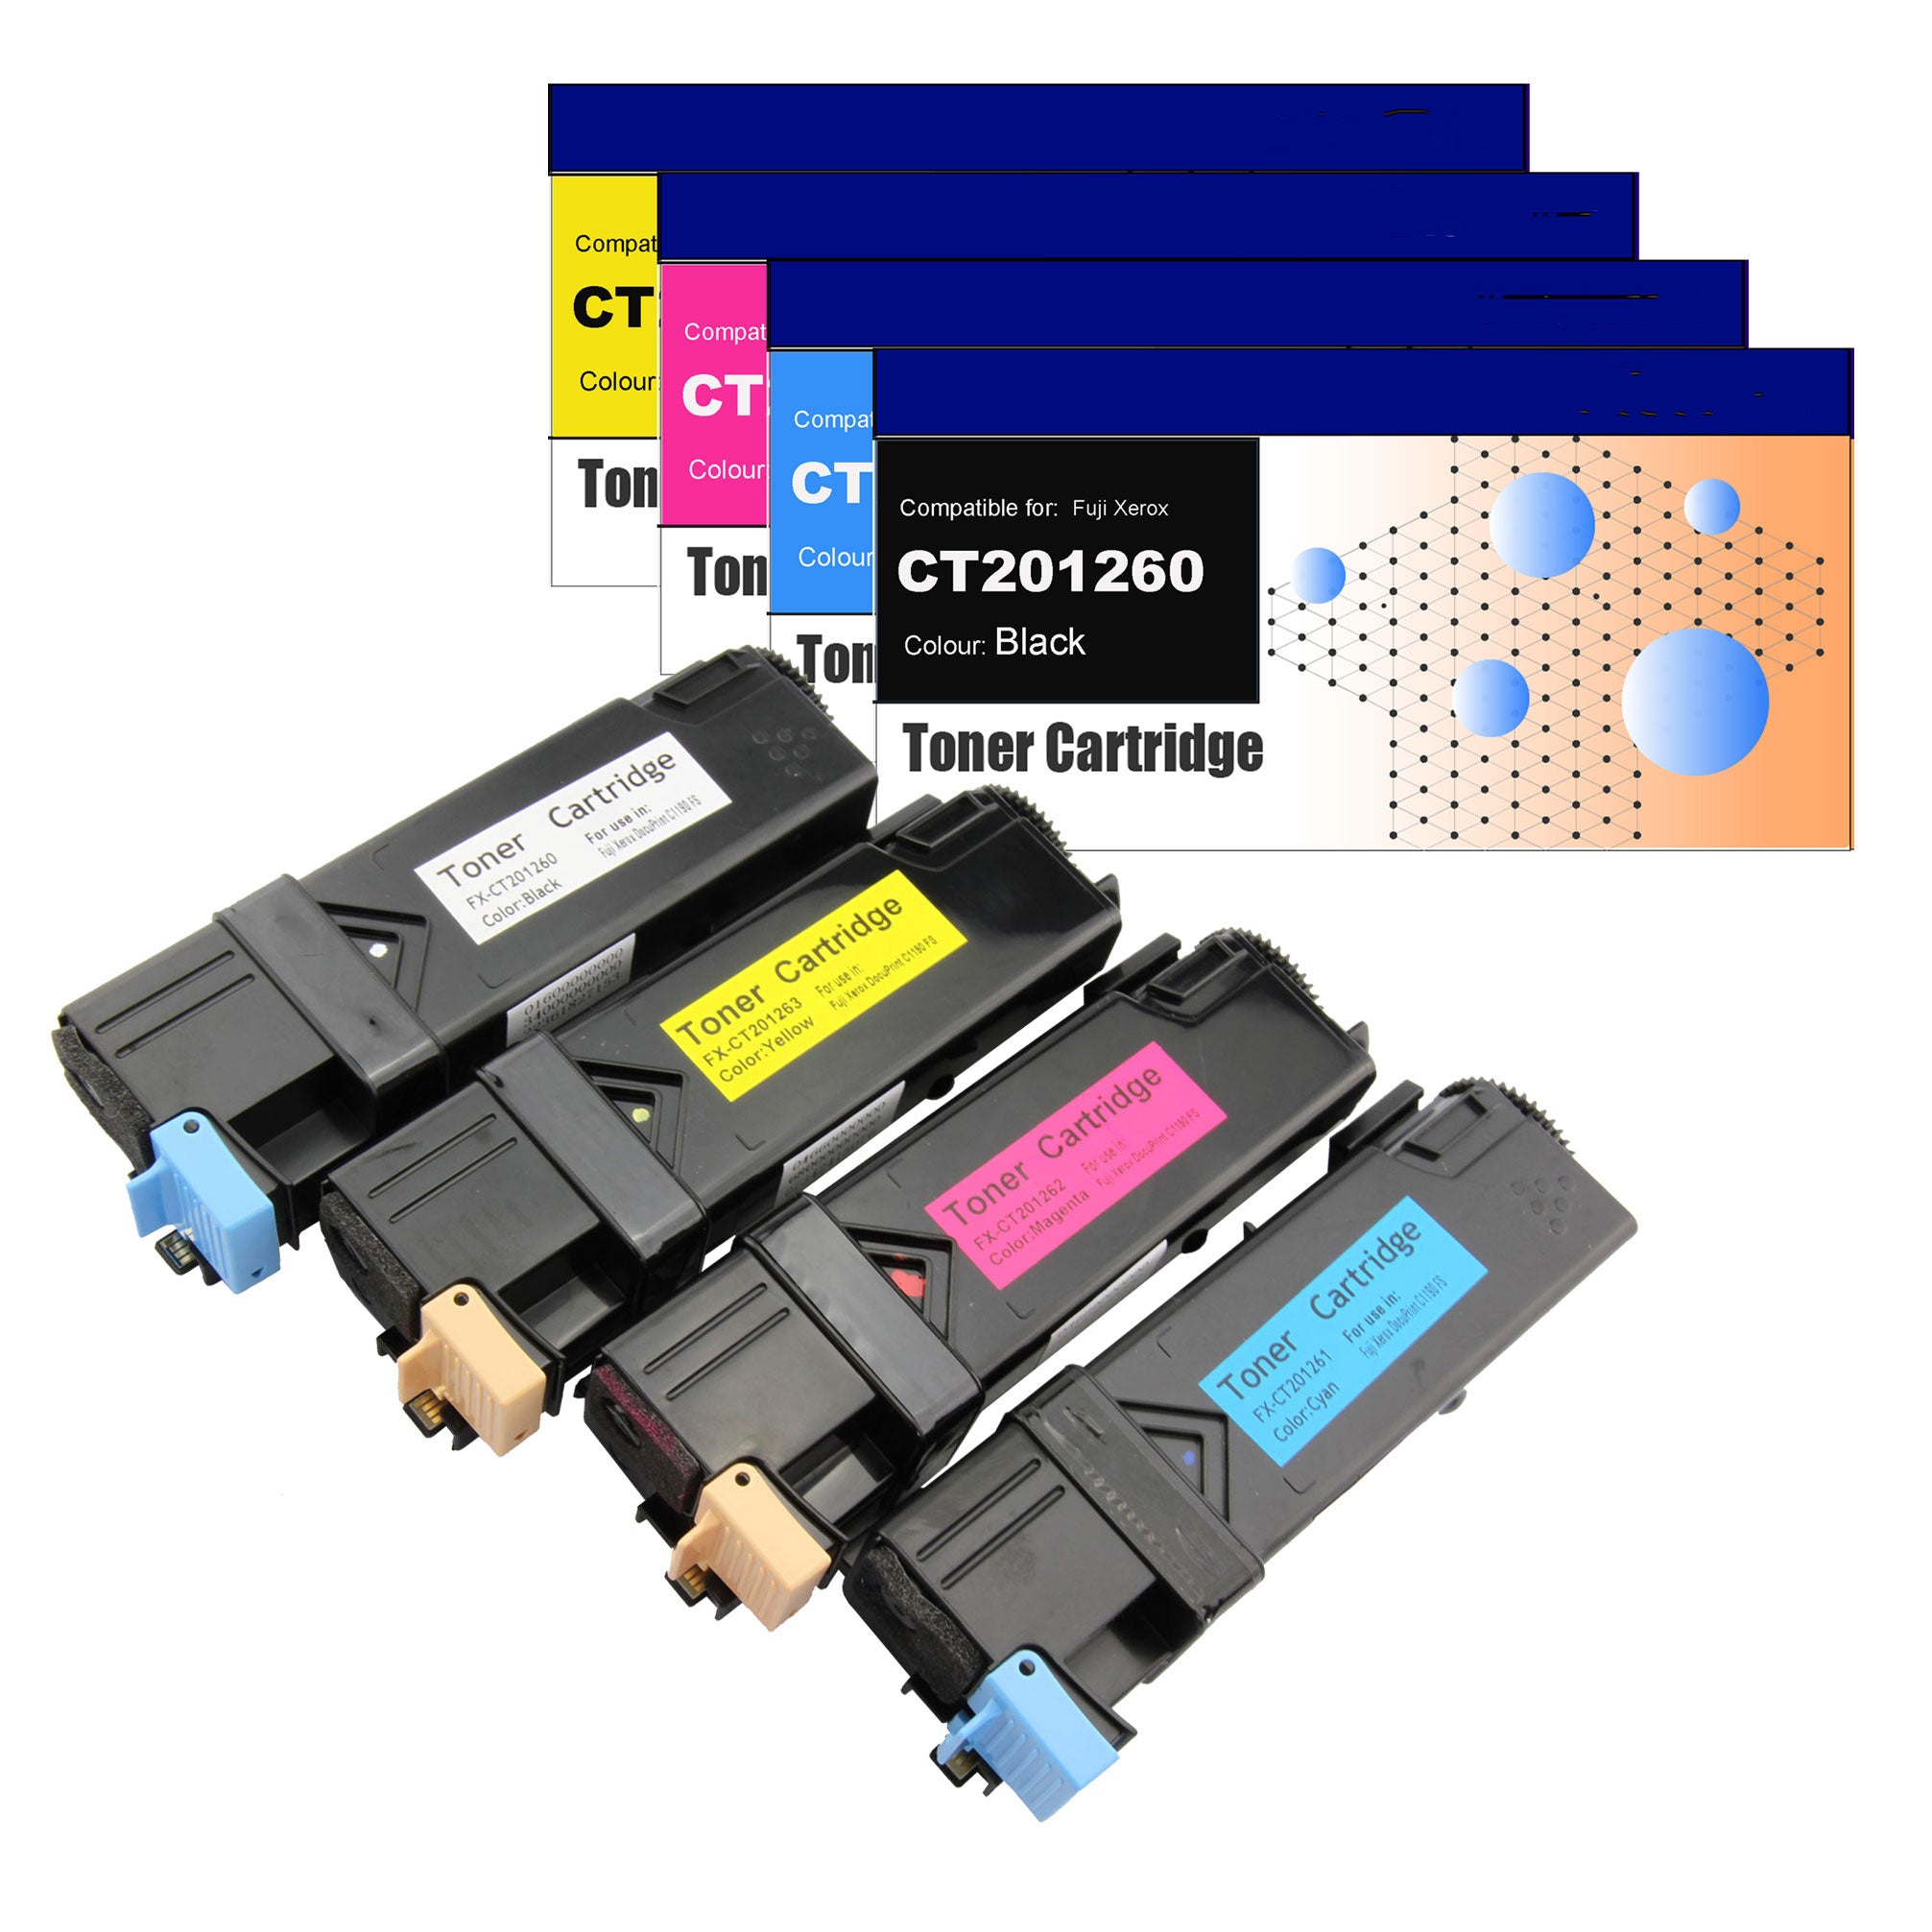 Compatible Toner Cartridges for Fuji Xerox CT201260 / CT201261 / CT201262 / CT201263 (C1190)